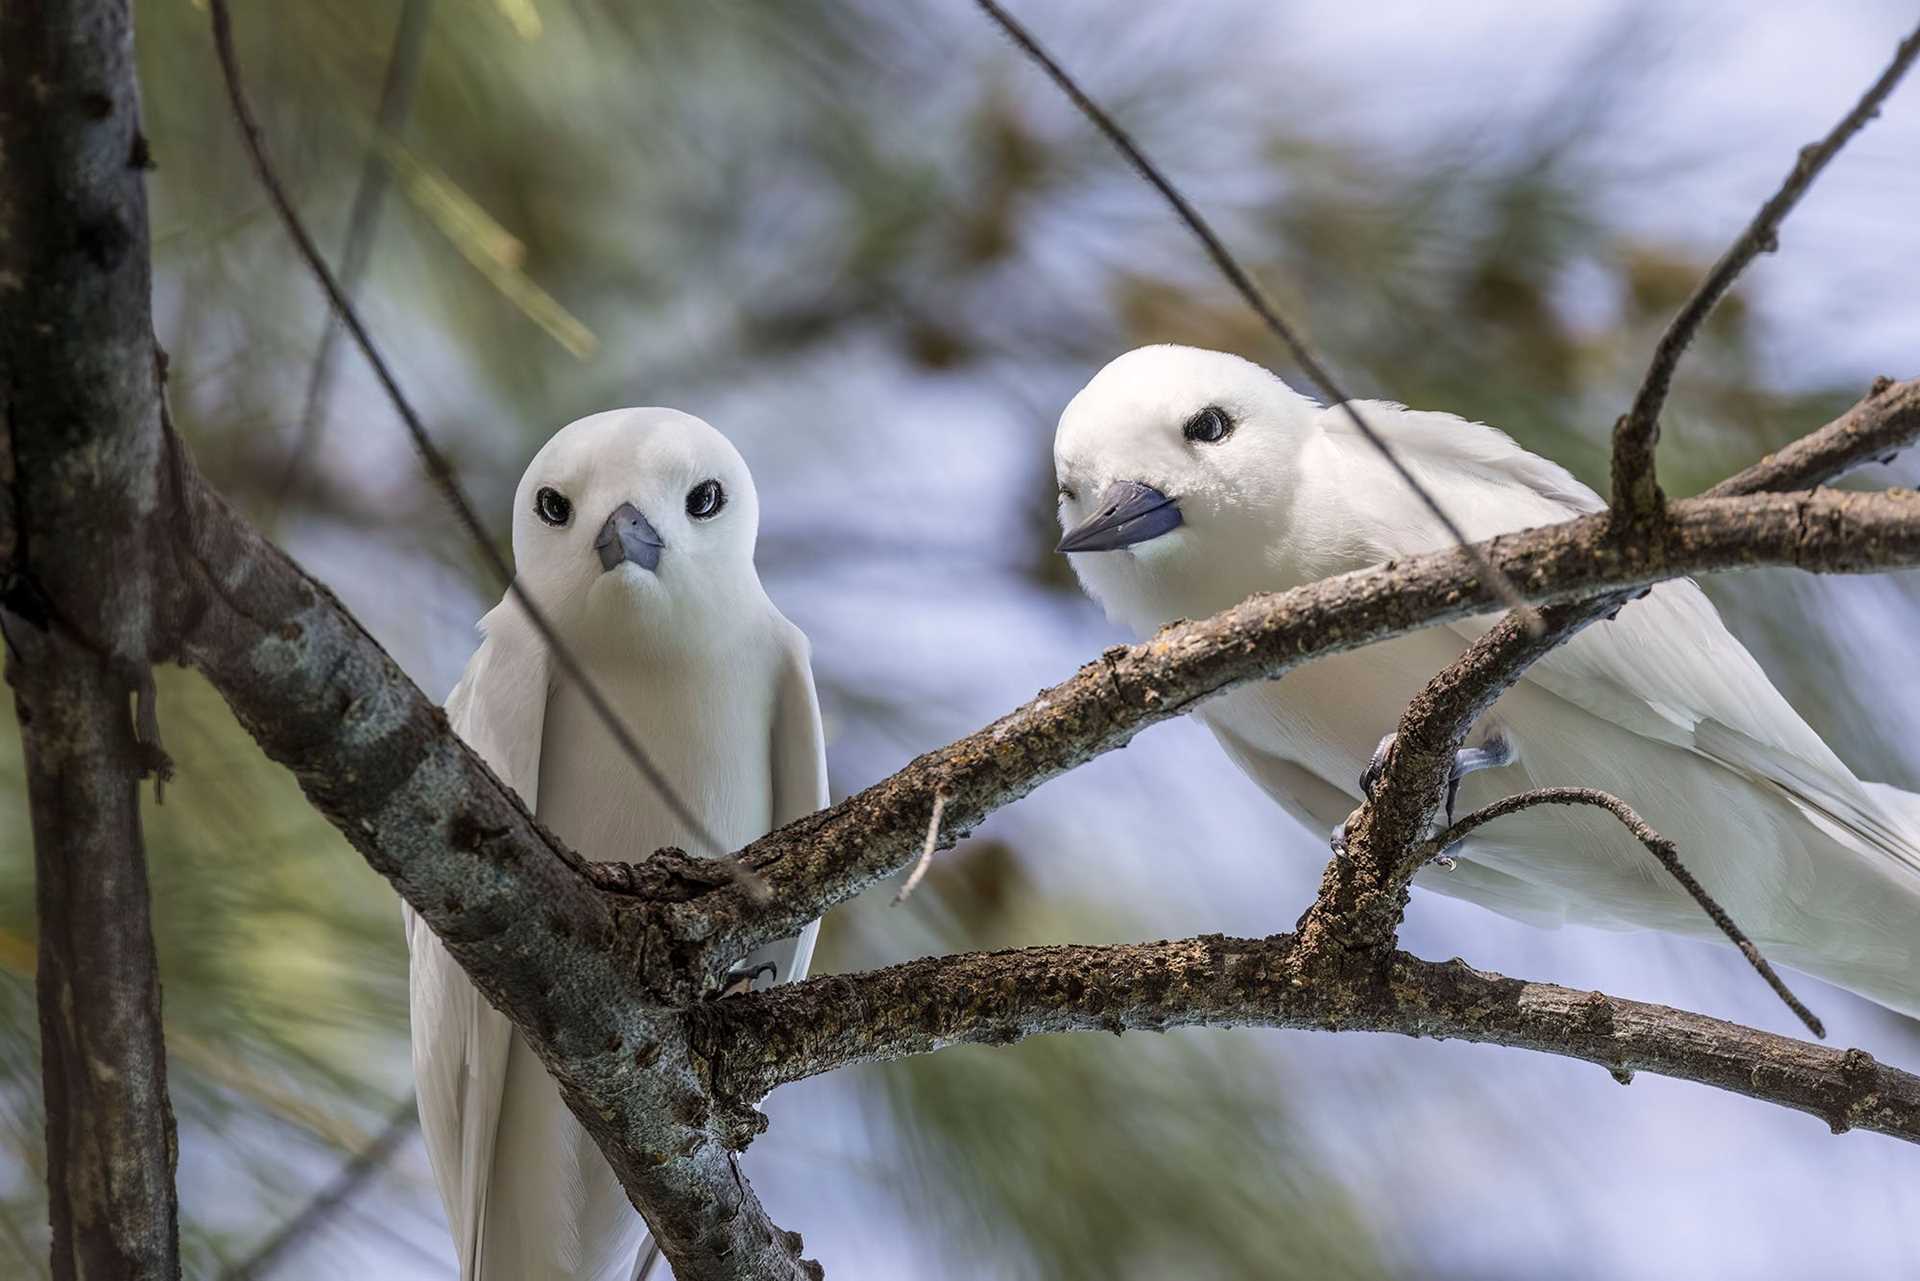 two white birds glaring at the camera